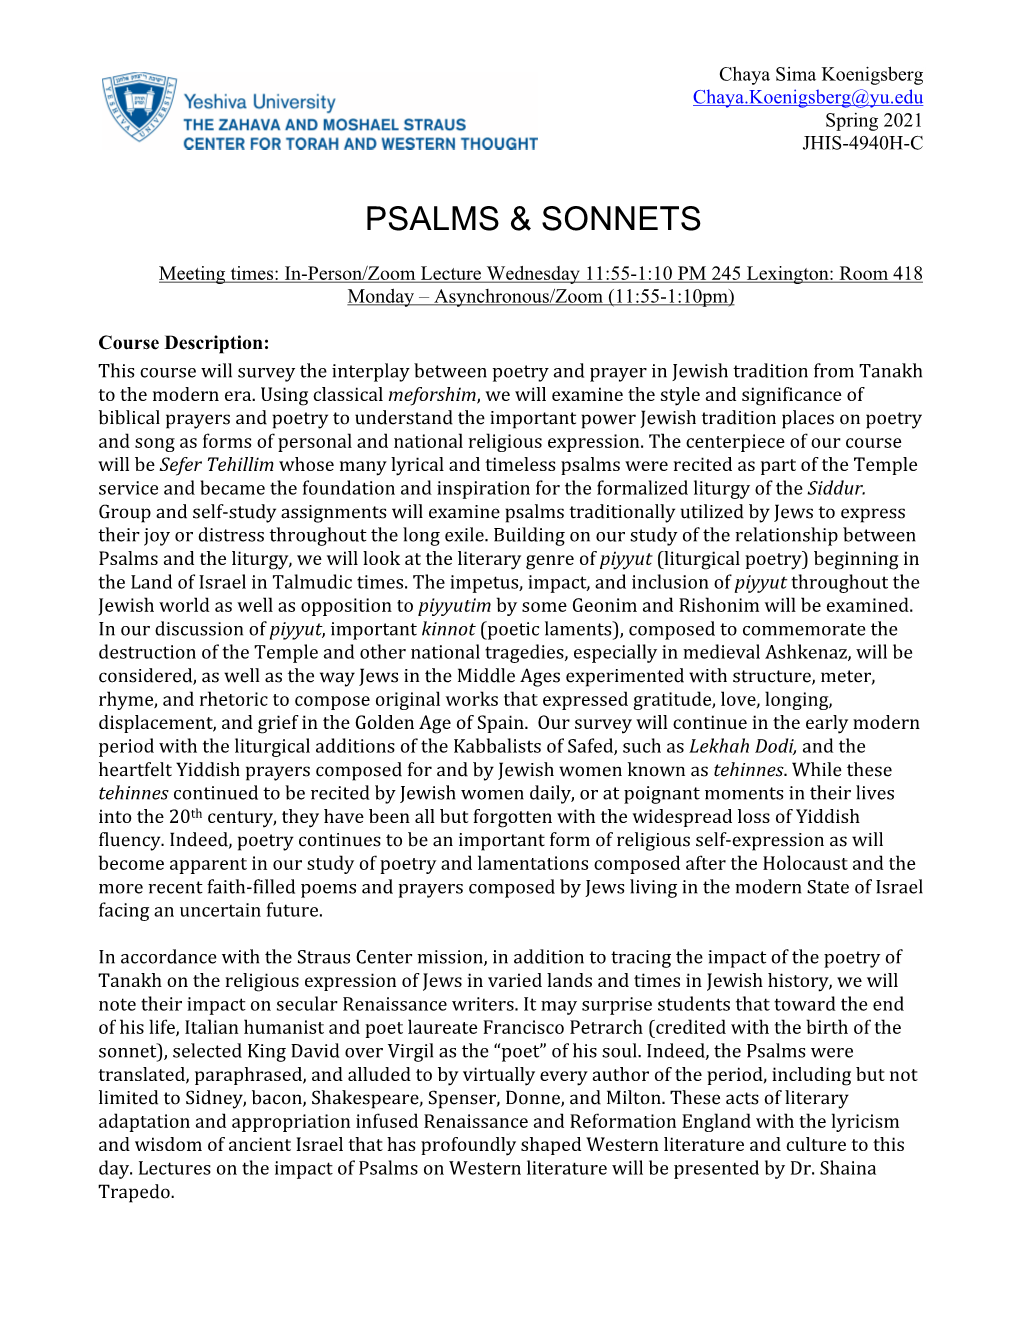 Psalms & Sonnets